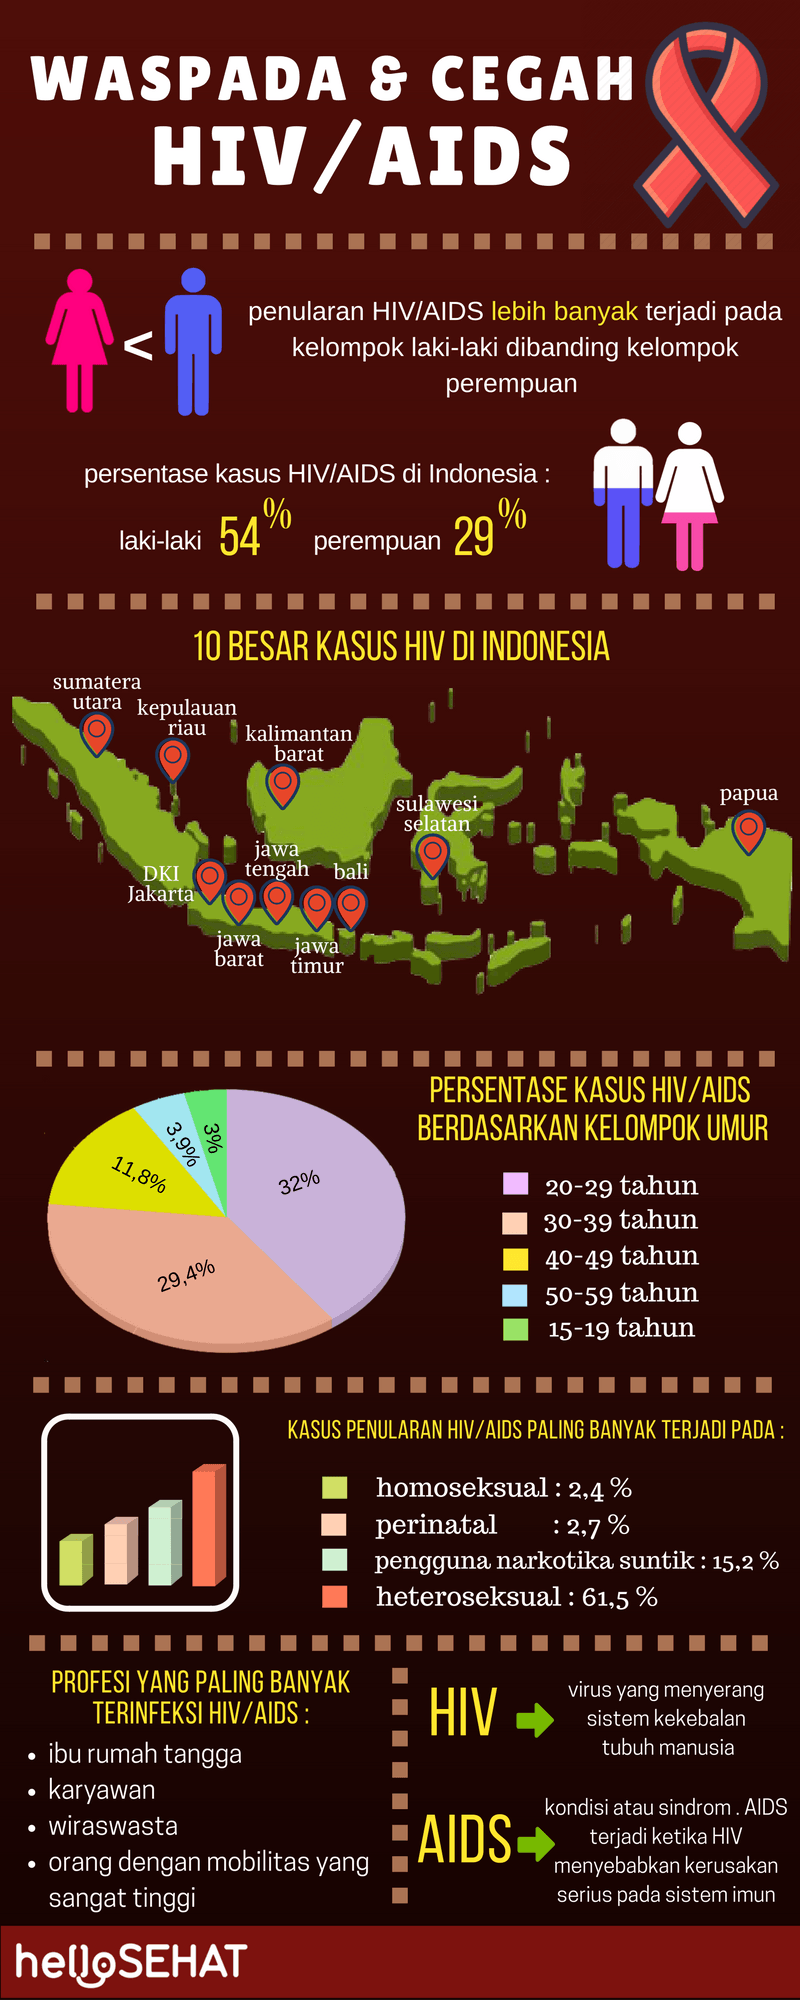 Zdravo zdrav Hiv pomagala infographic u Indoneziji